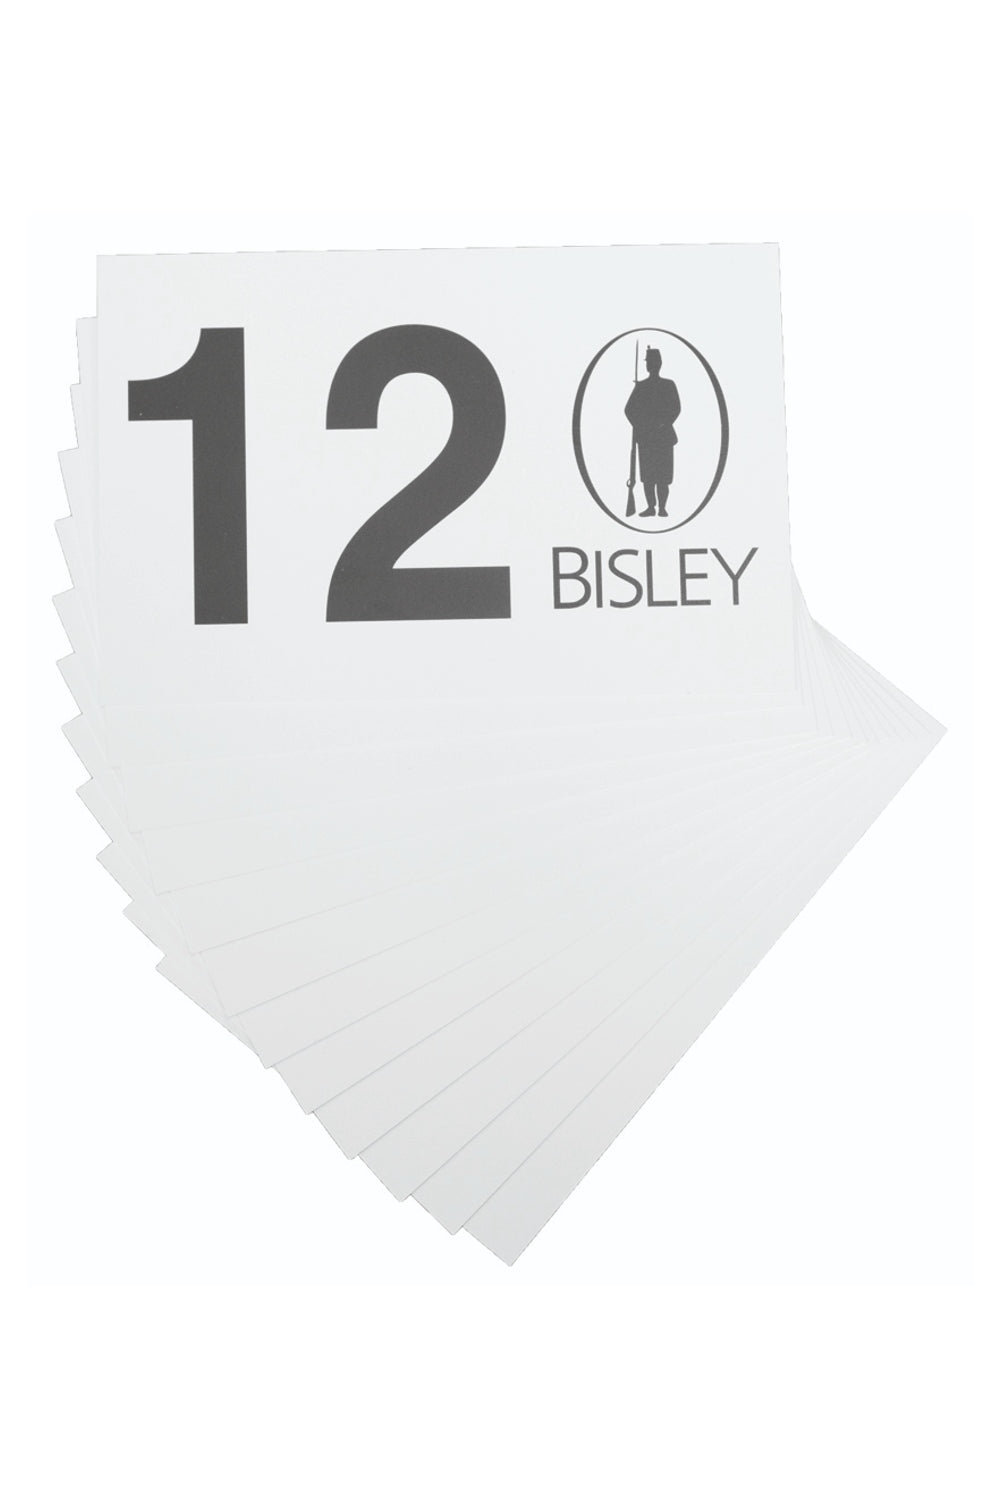 Bisley Gun Stand Numbers